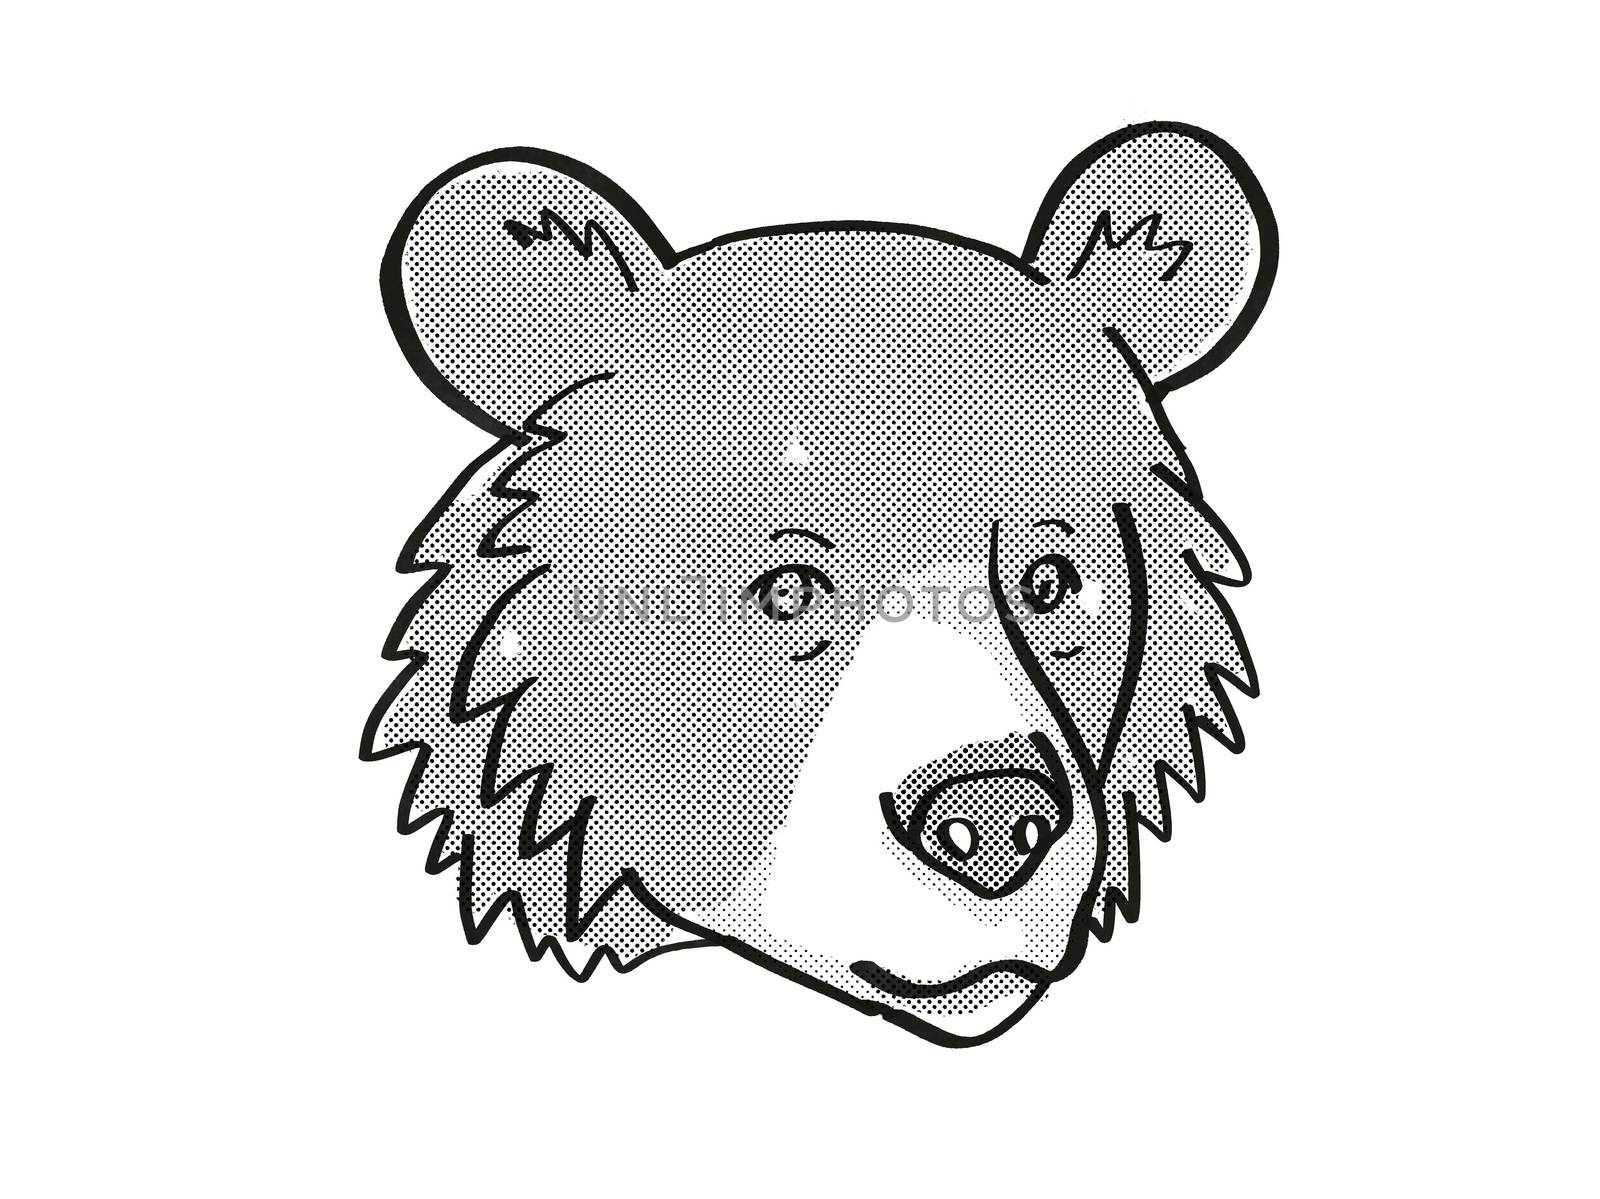  Asiatic Black Bear or Ursus tibetanus Endangered Wildlife Cartoon Mono Line Drawing by patrimonio